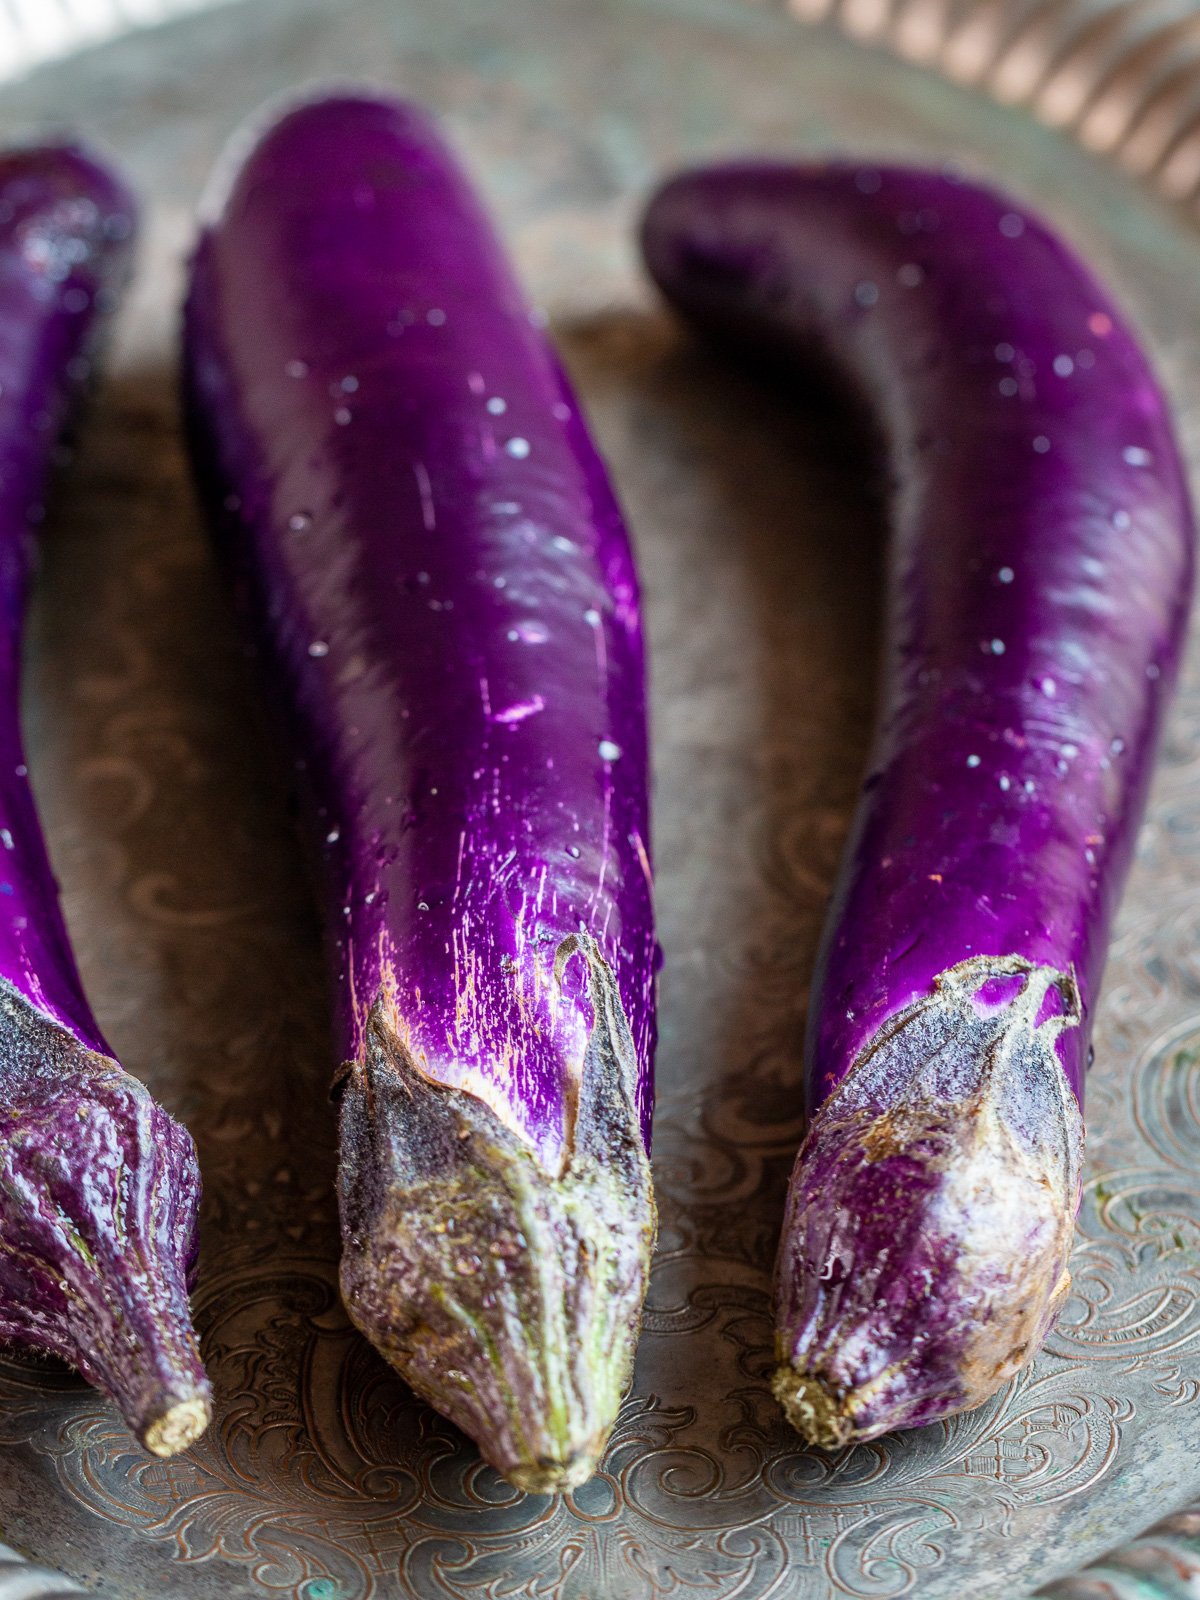 3 whole bright purple Asian eggplants.